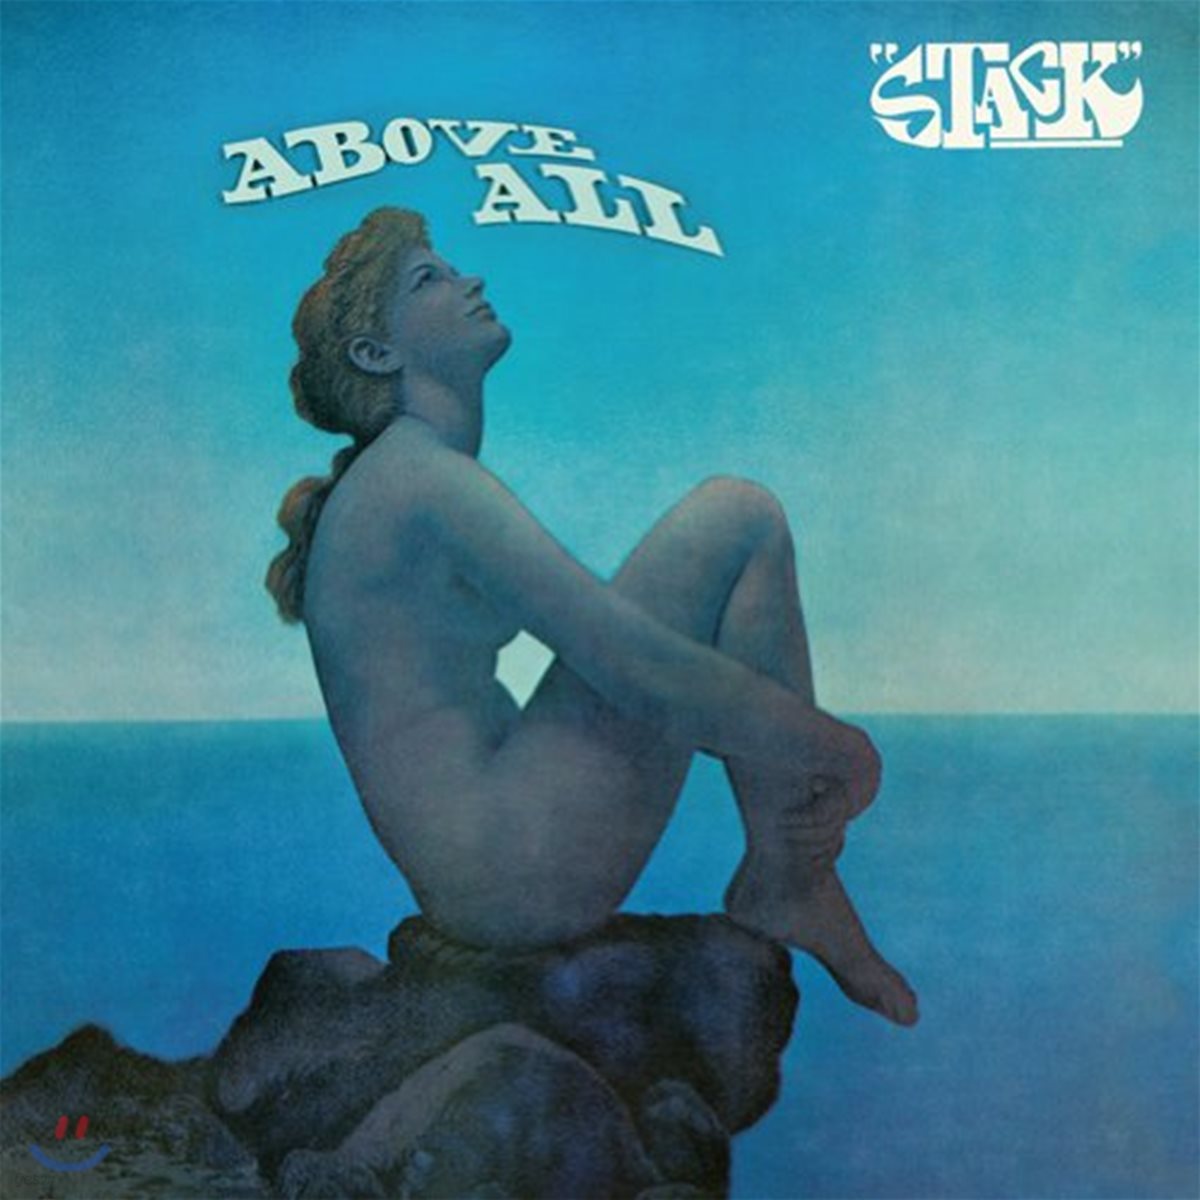 Stack (스택) - Above All [LP]